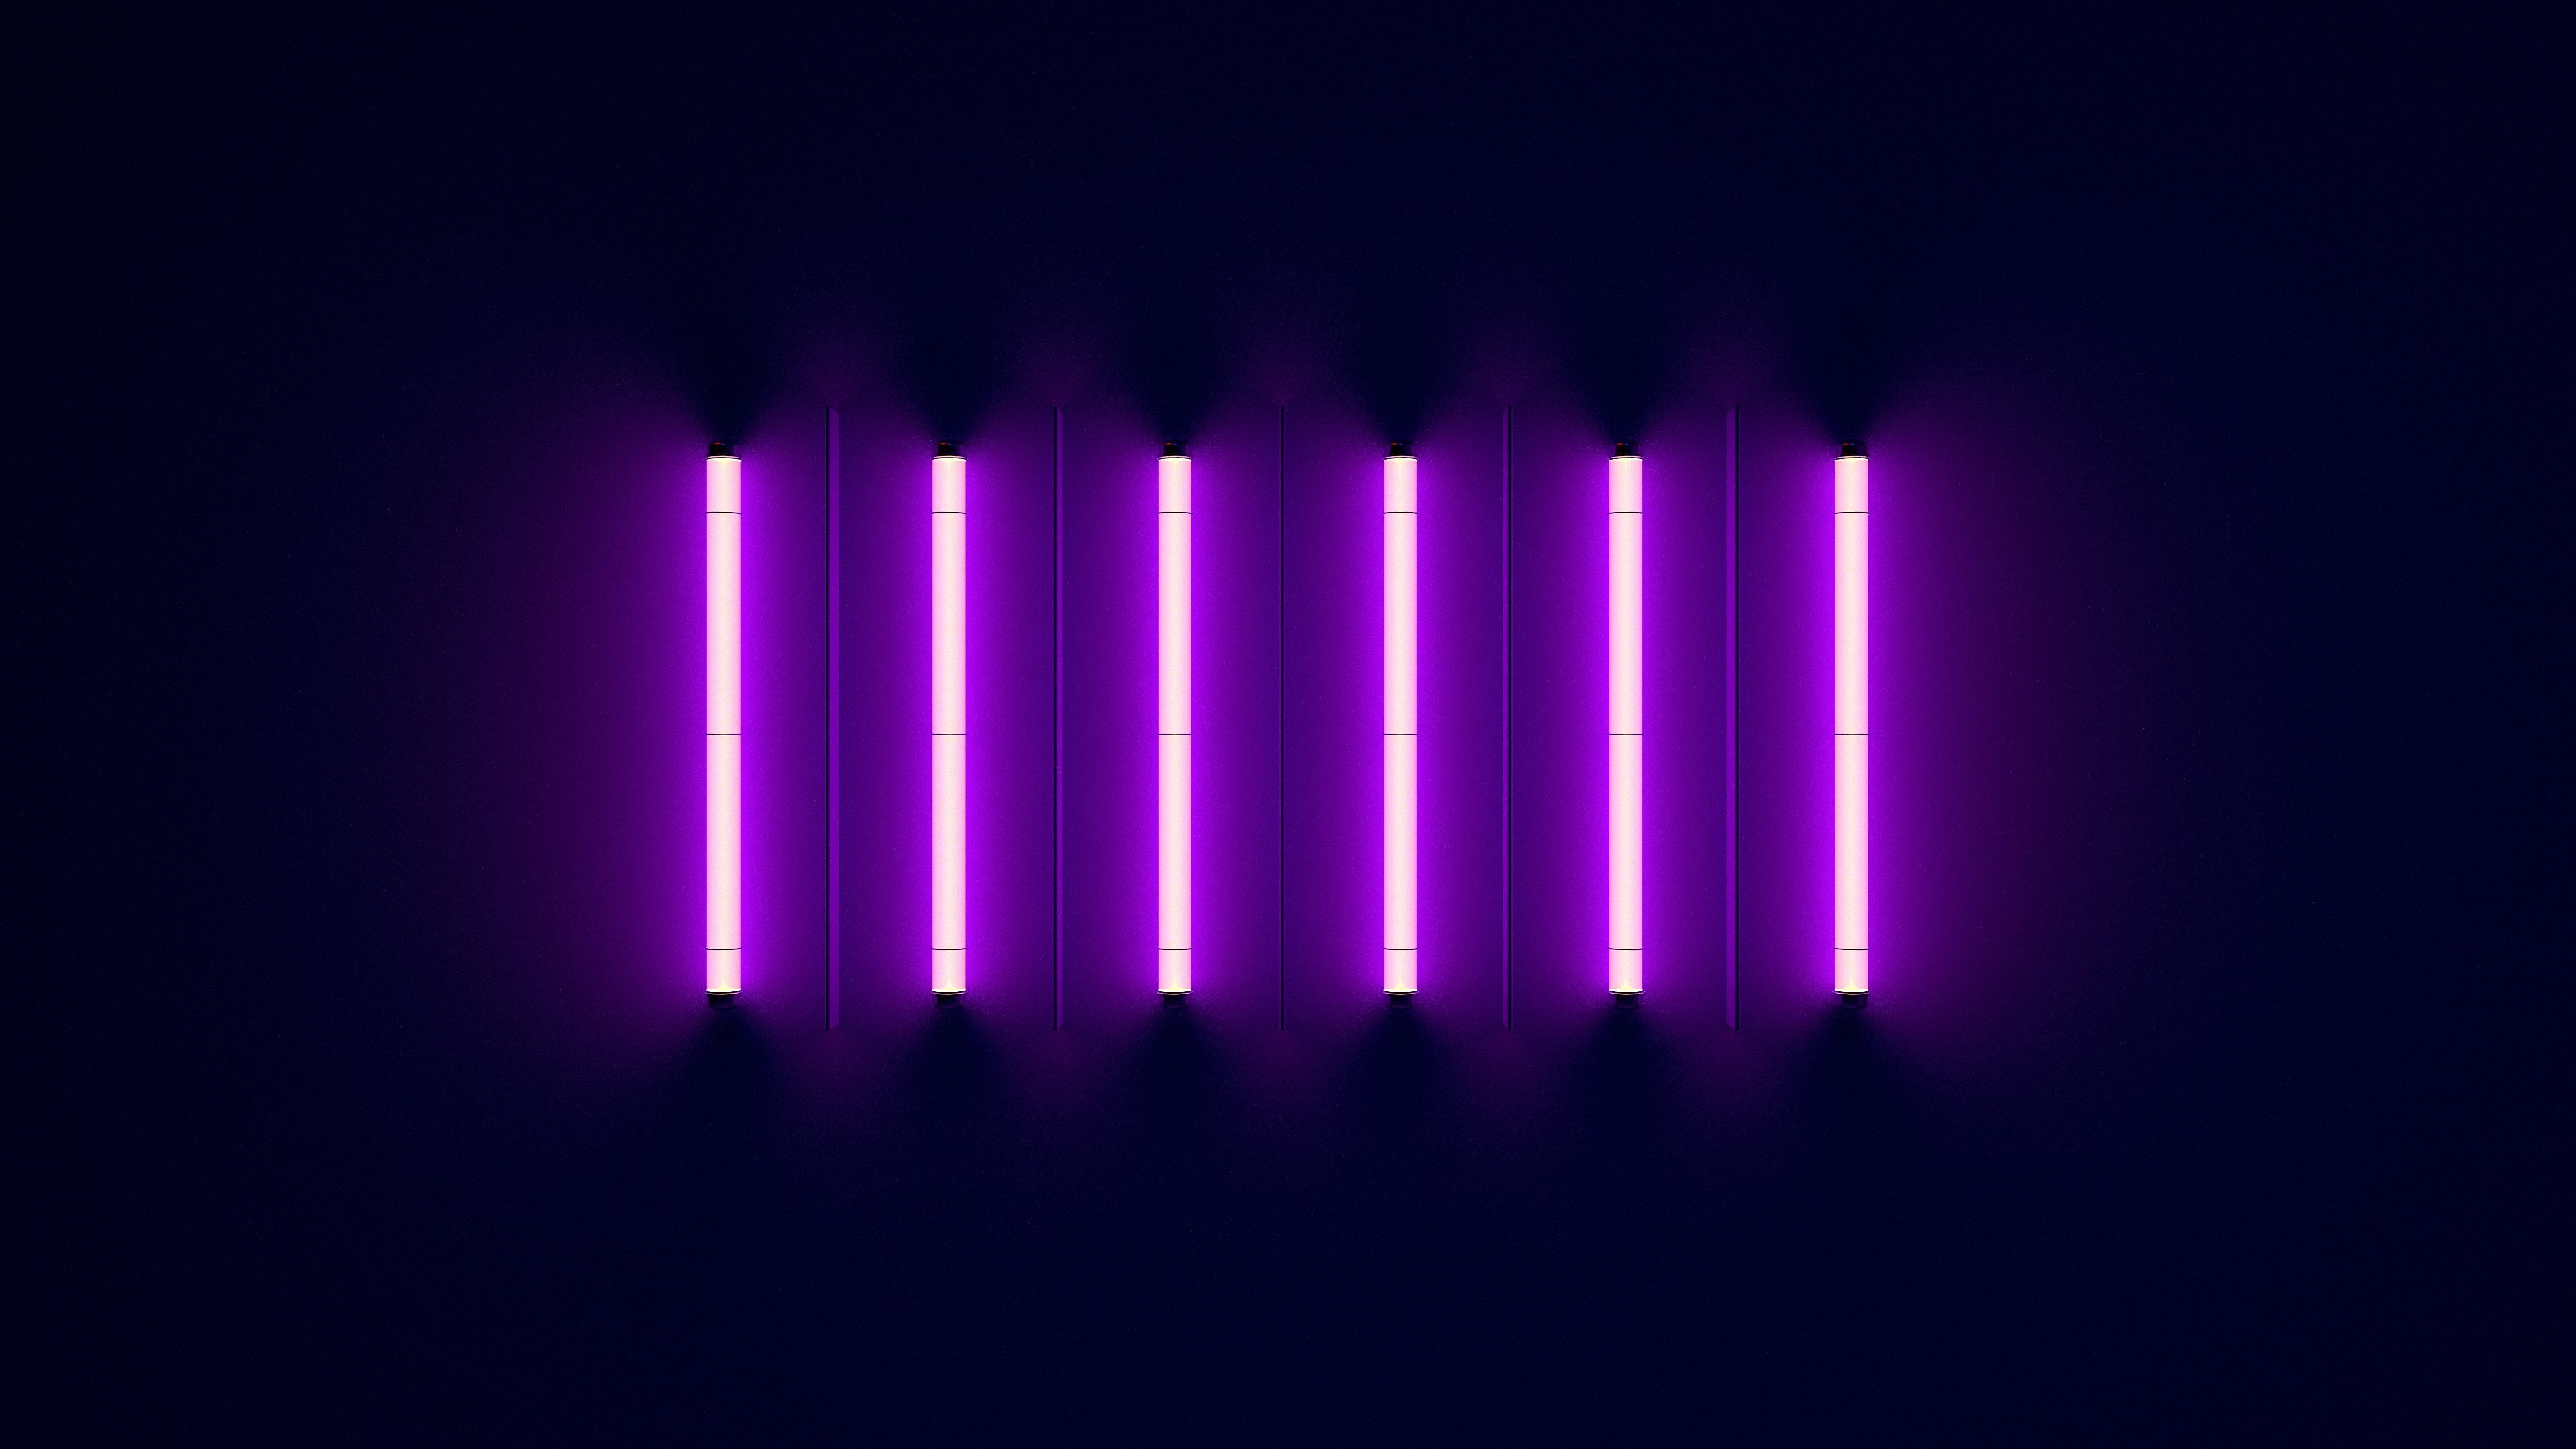 Purple Glowing Lines Wallpapers